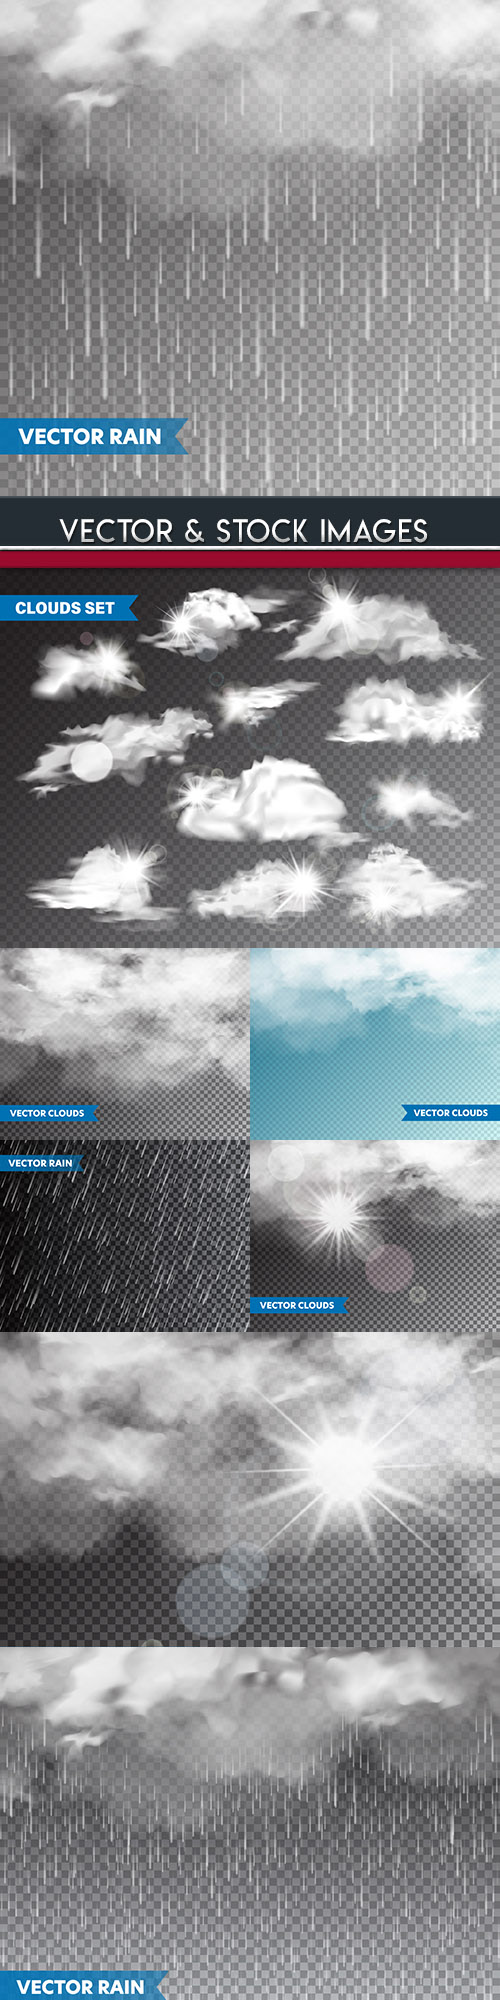 Cloud clouds and rain realistic 3 d illustrations